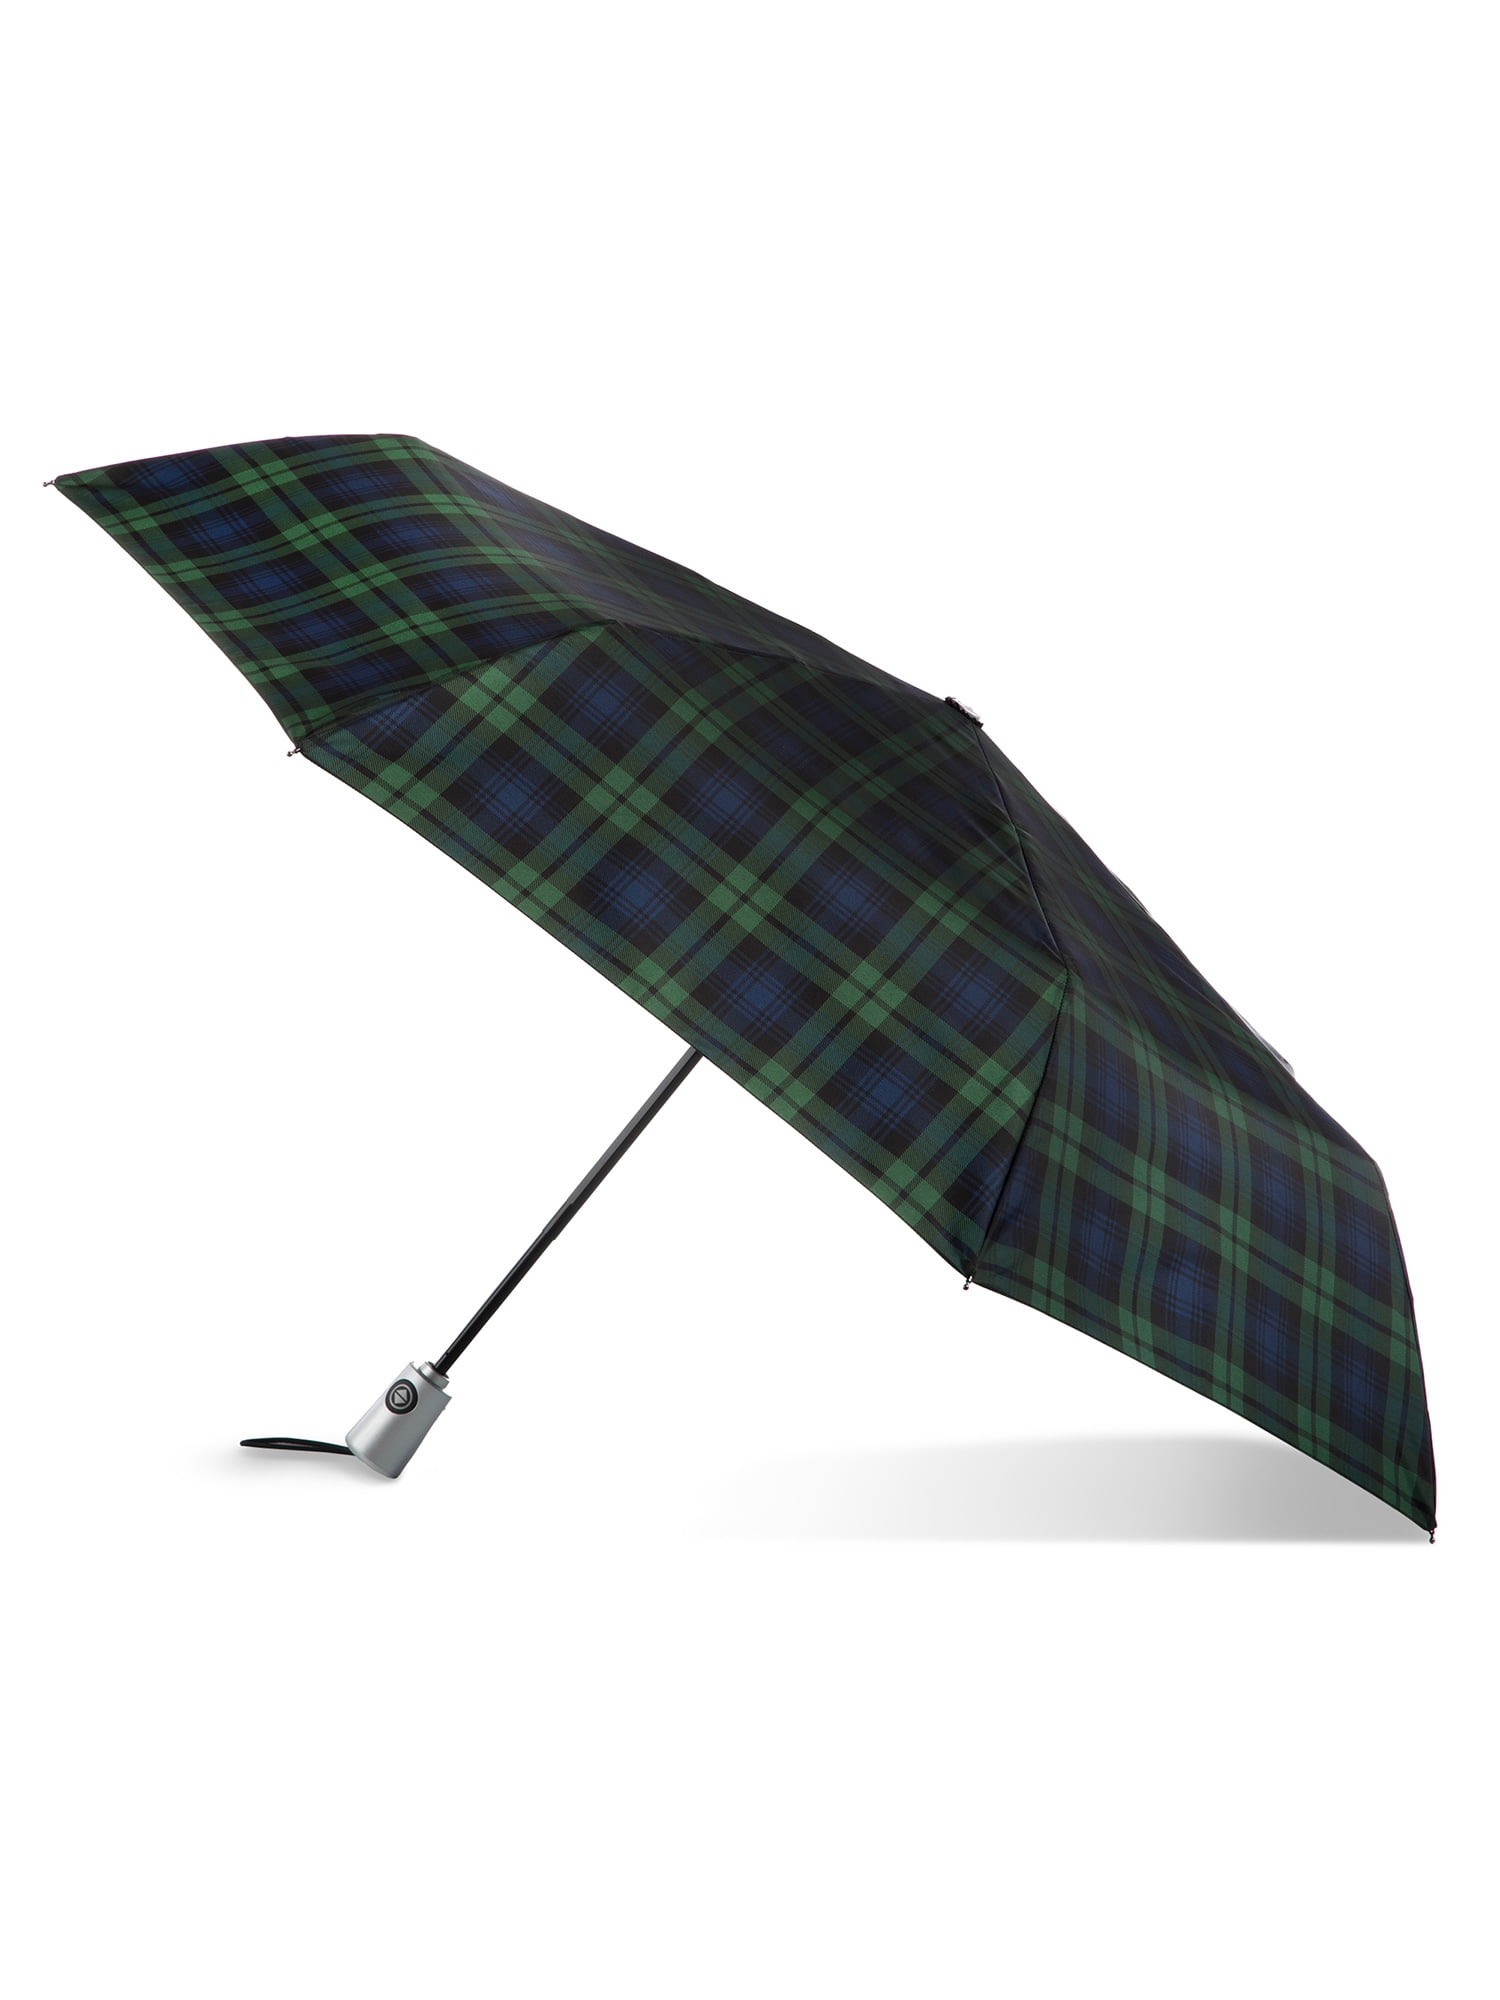 Mini Folding Compact Pocket Umbrella 41" Telescopic Wedding Lightweight Brolly 